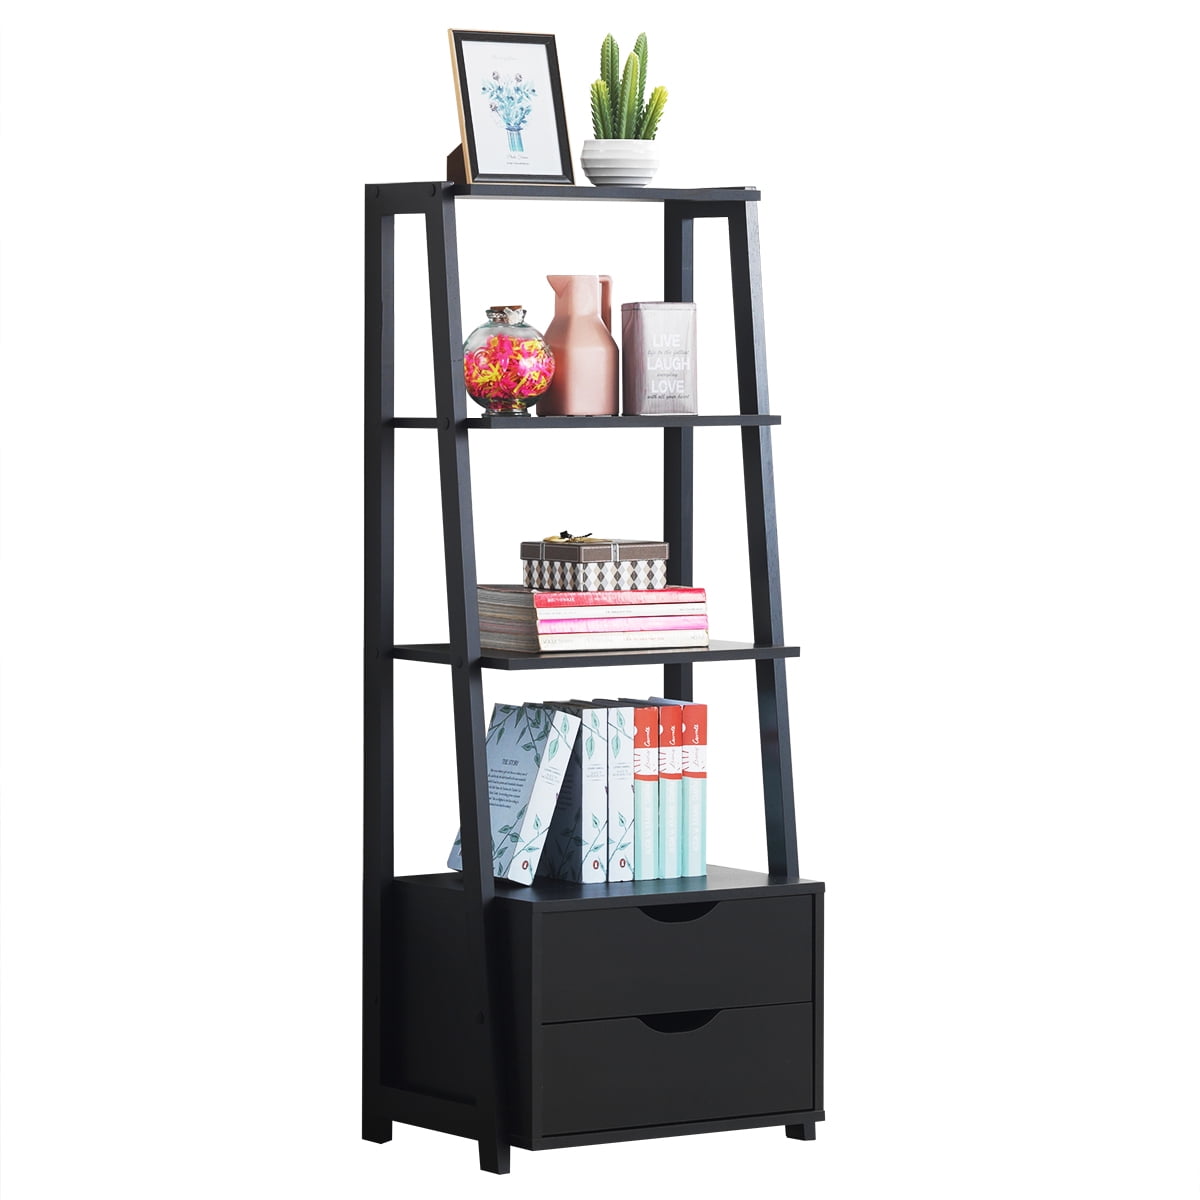 4-Tier Ladder Shelf Bookshelf Bookcase Storage Display Leaning Home Office Decor 